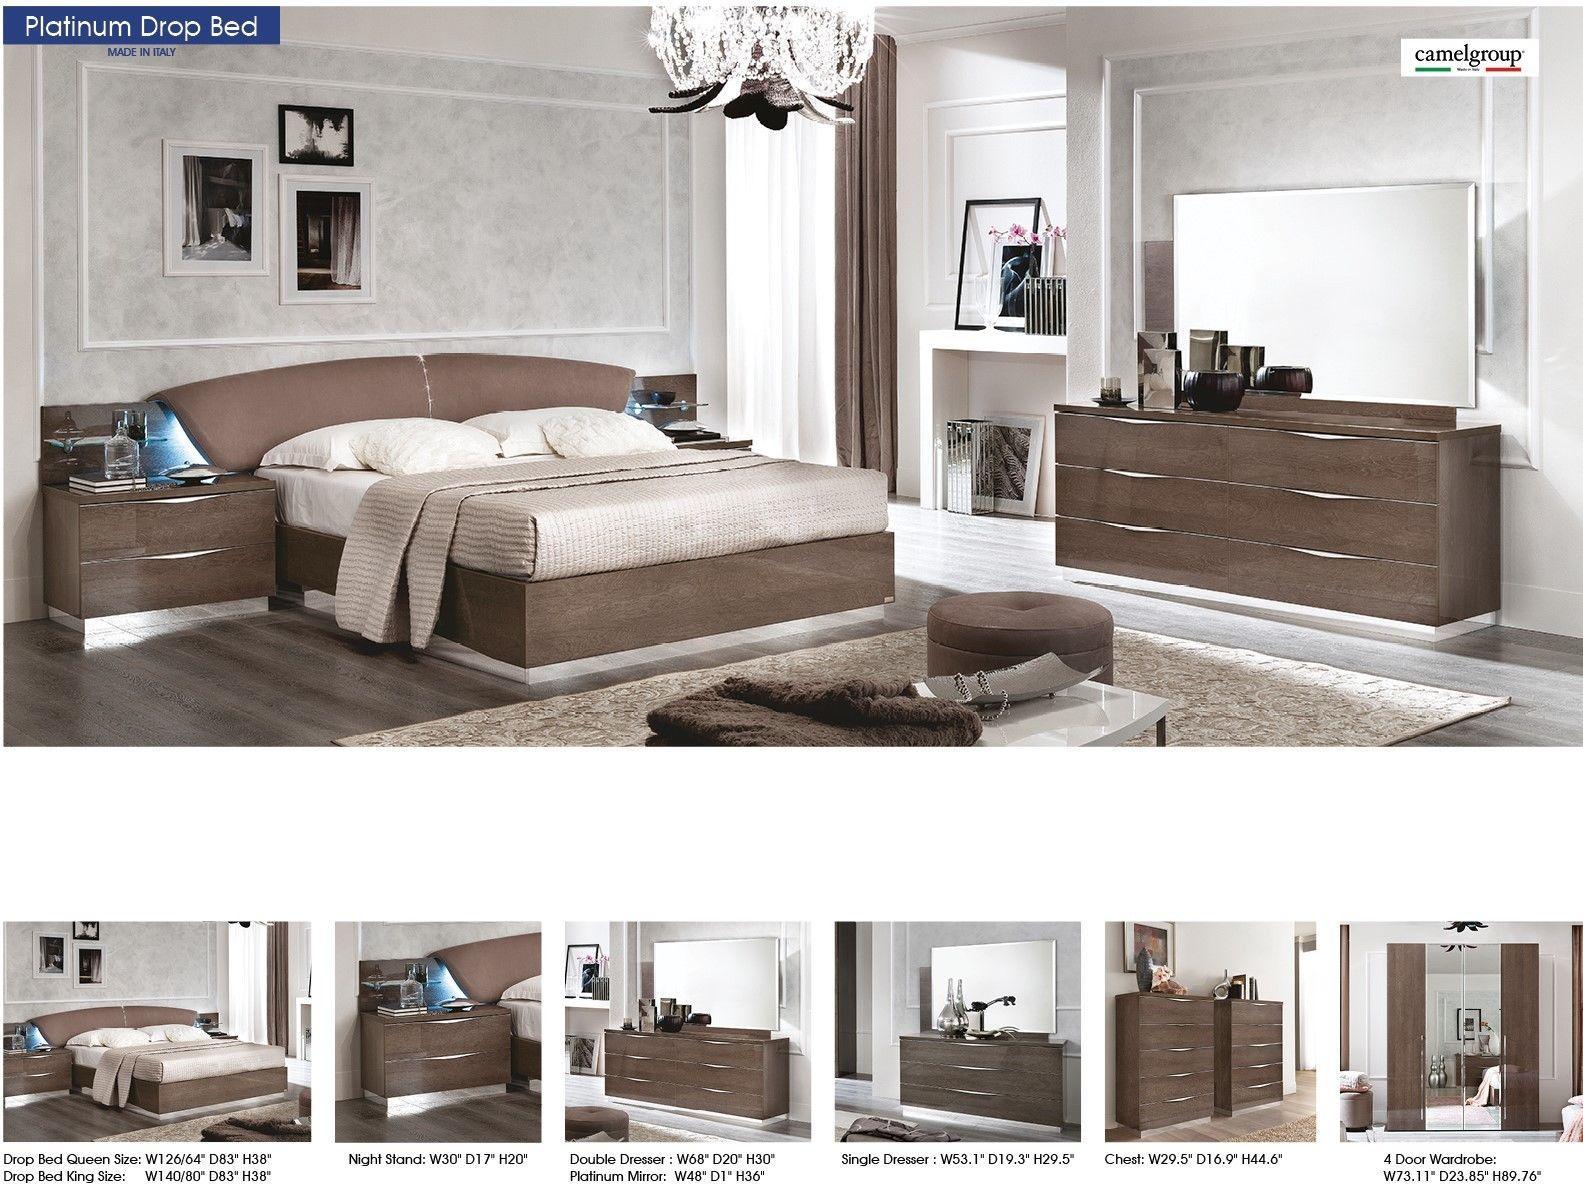 

    
 Order  King Bedroom Set 5Pcs w/Single Dresser Modern Made In Italy ESF Platinum Drop
